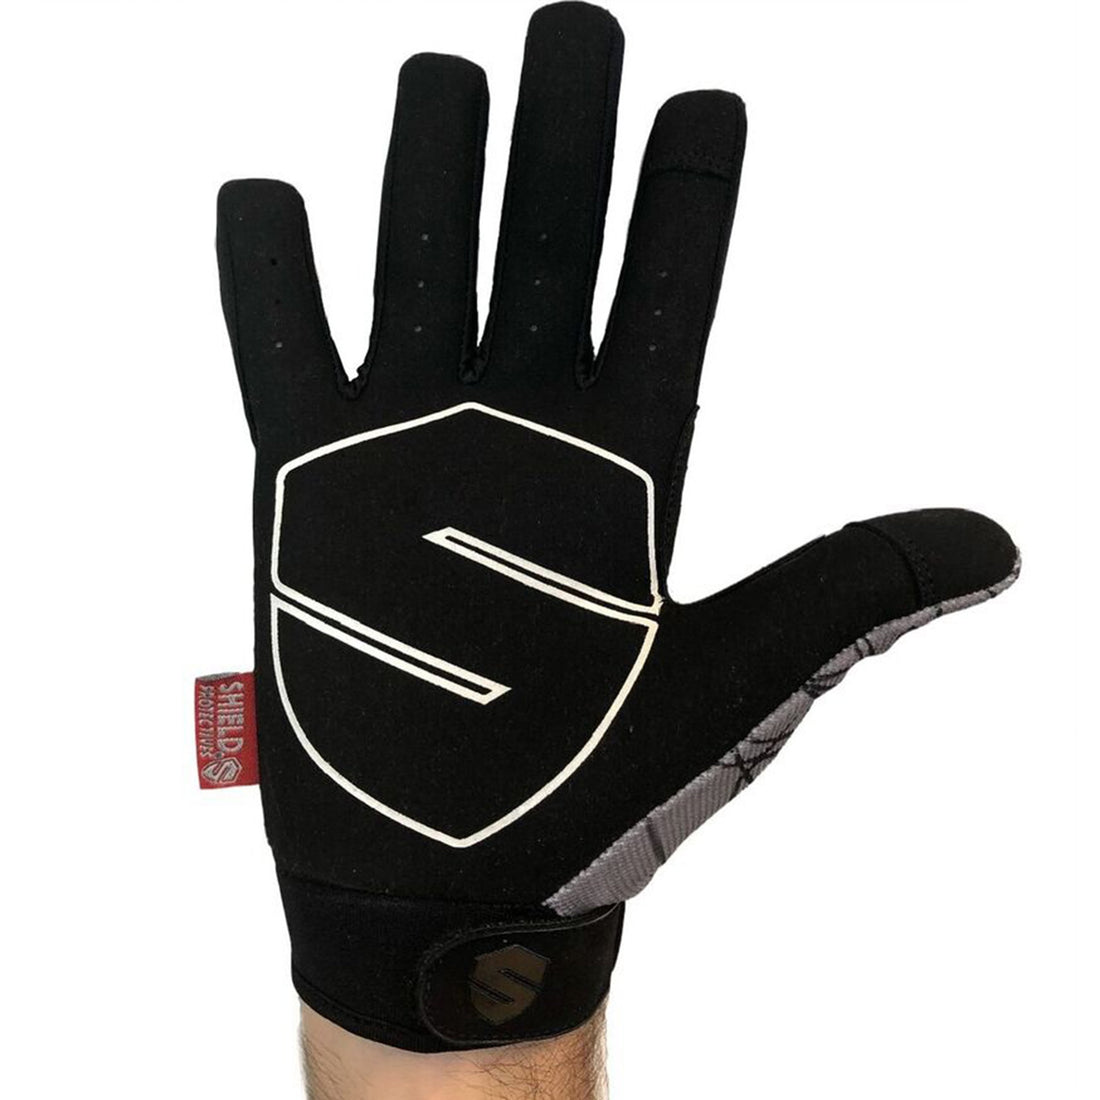 Shield Protectives Lite Gloves GREY/BLACK